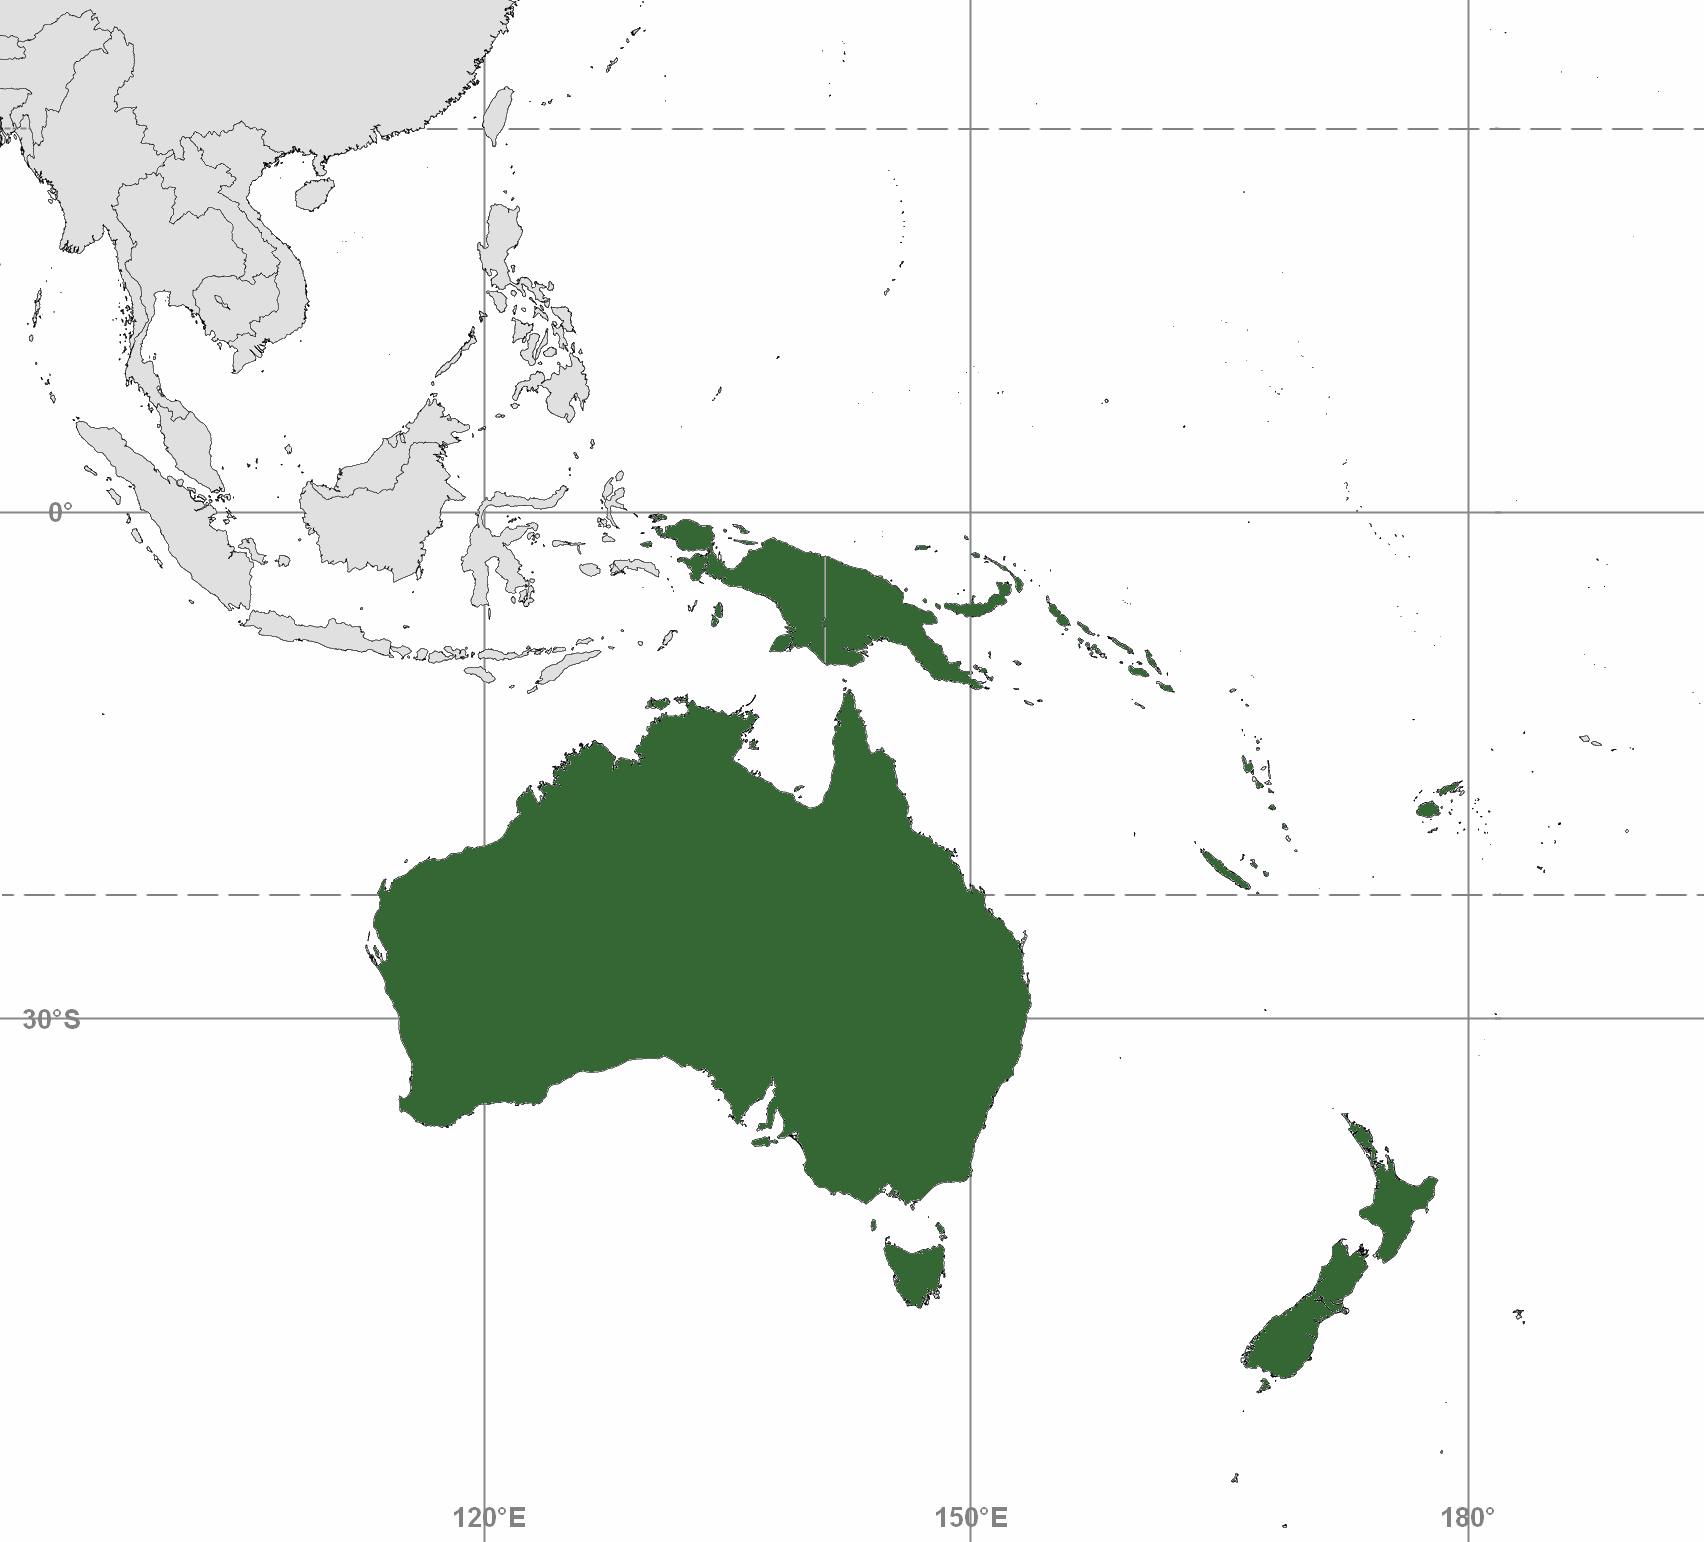 Is Australasia The New Oceania?